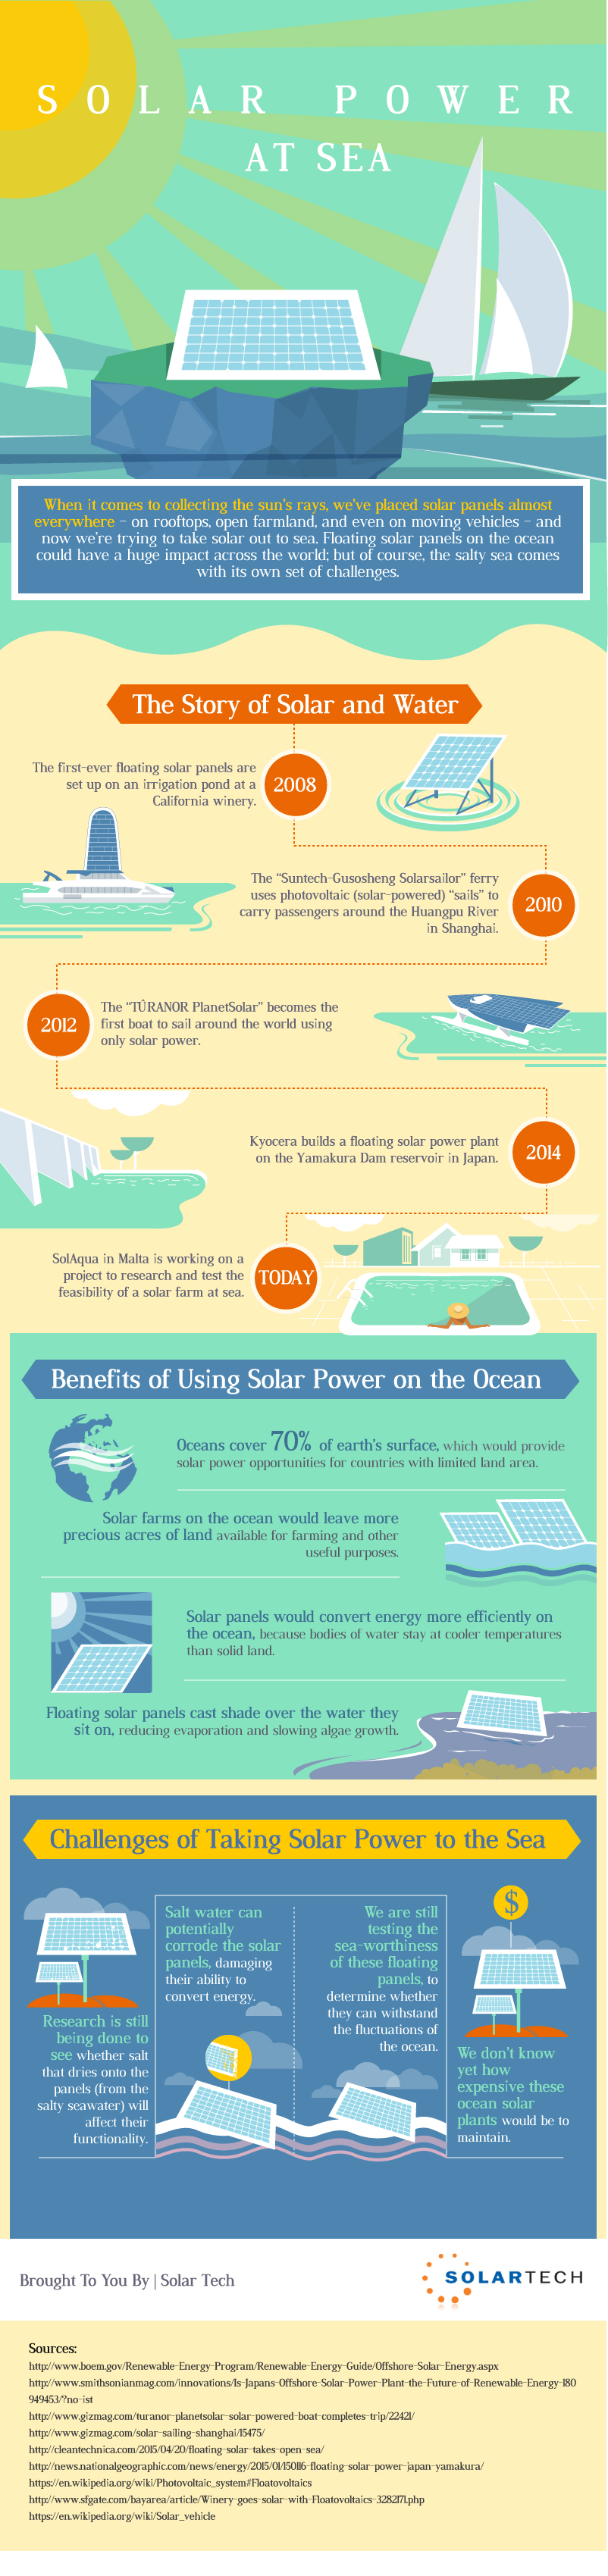 Solar Power at Sea